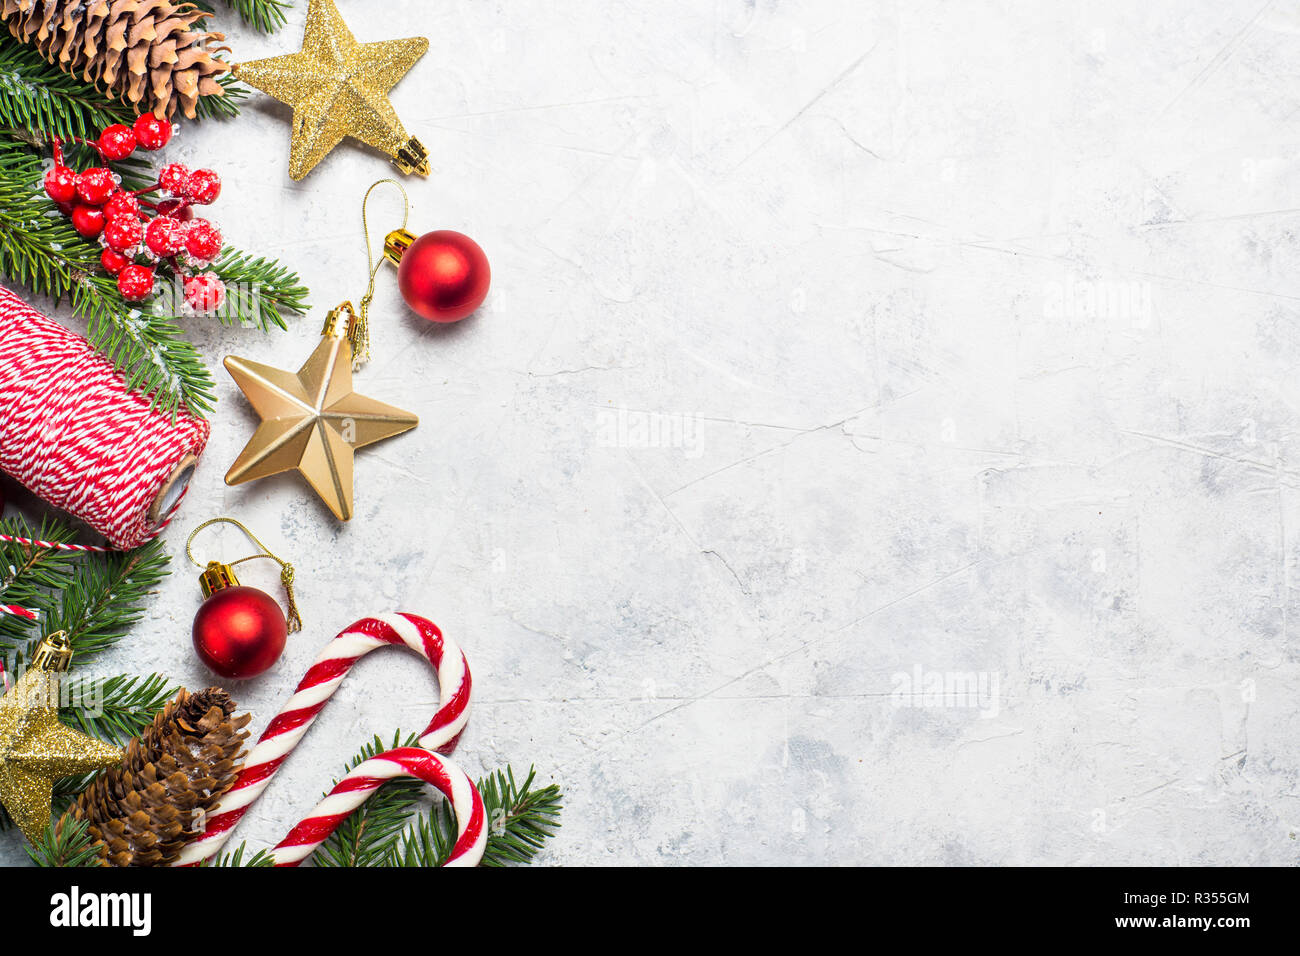 Christmas background on white Stock Photo - Alamy